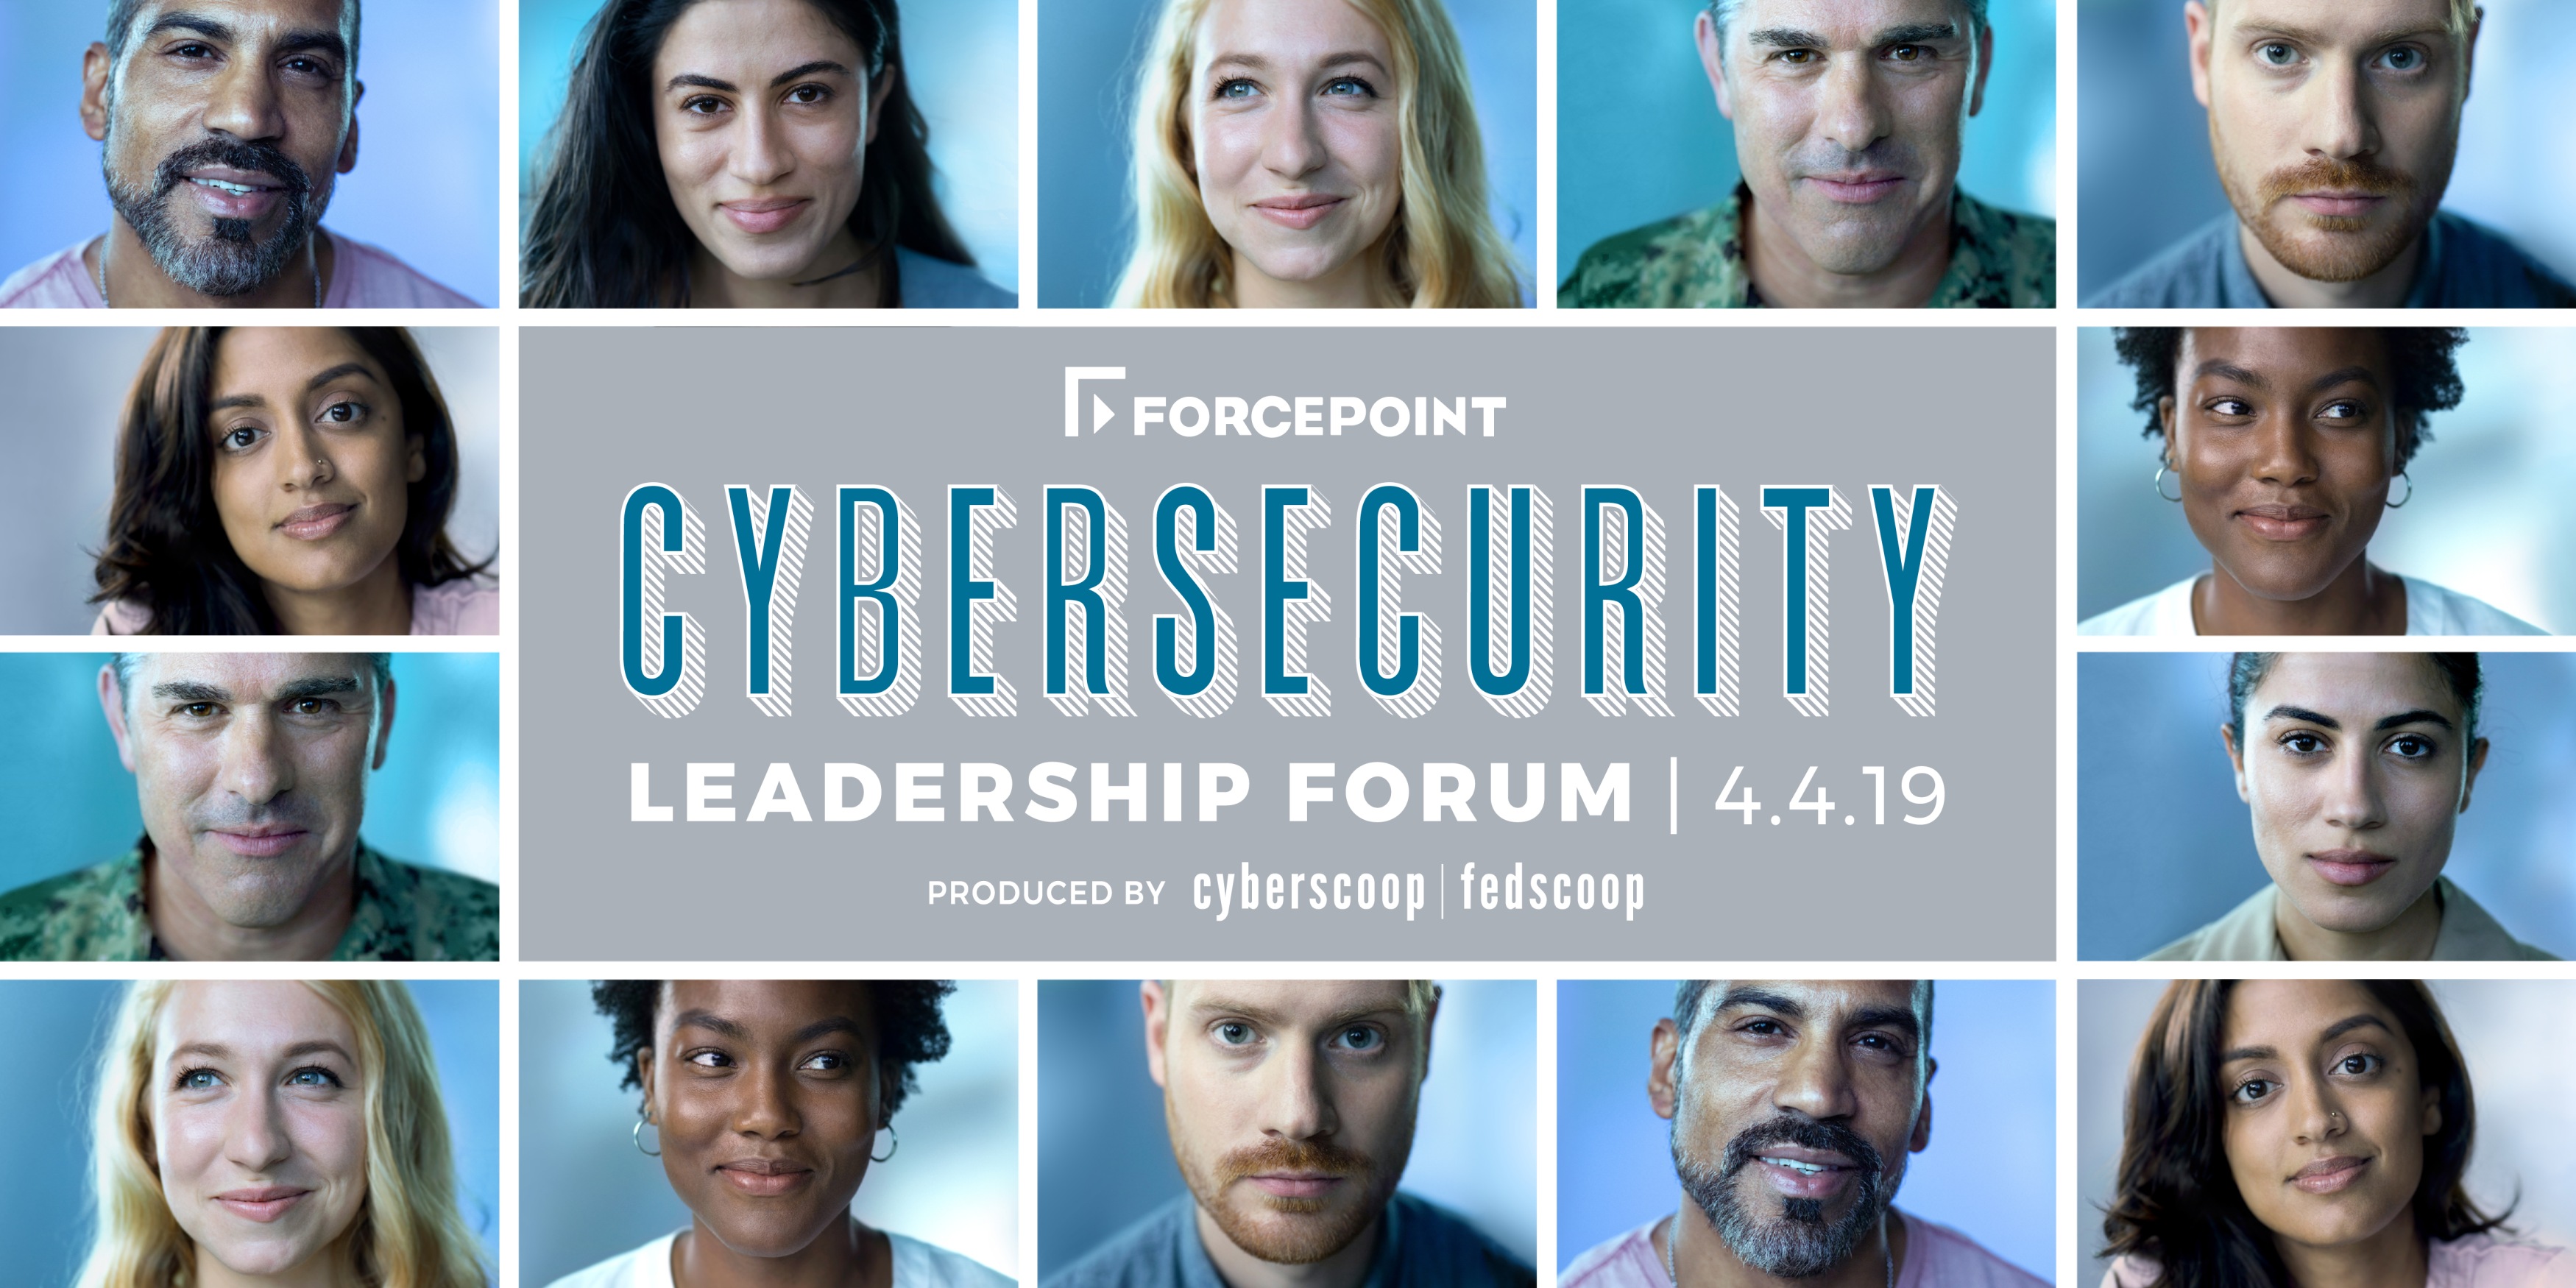 Forcepoint Cybersecurity Leadership Forum 04.04.19 produced by cyberscoop|fedscoop